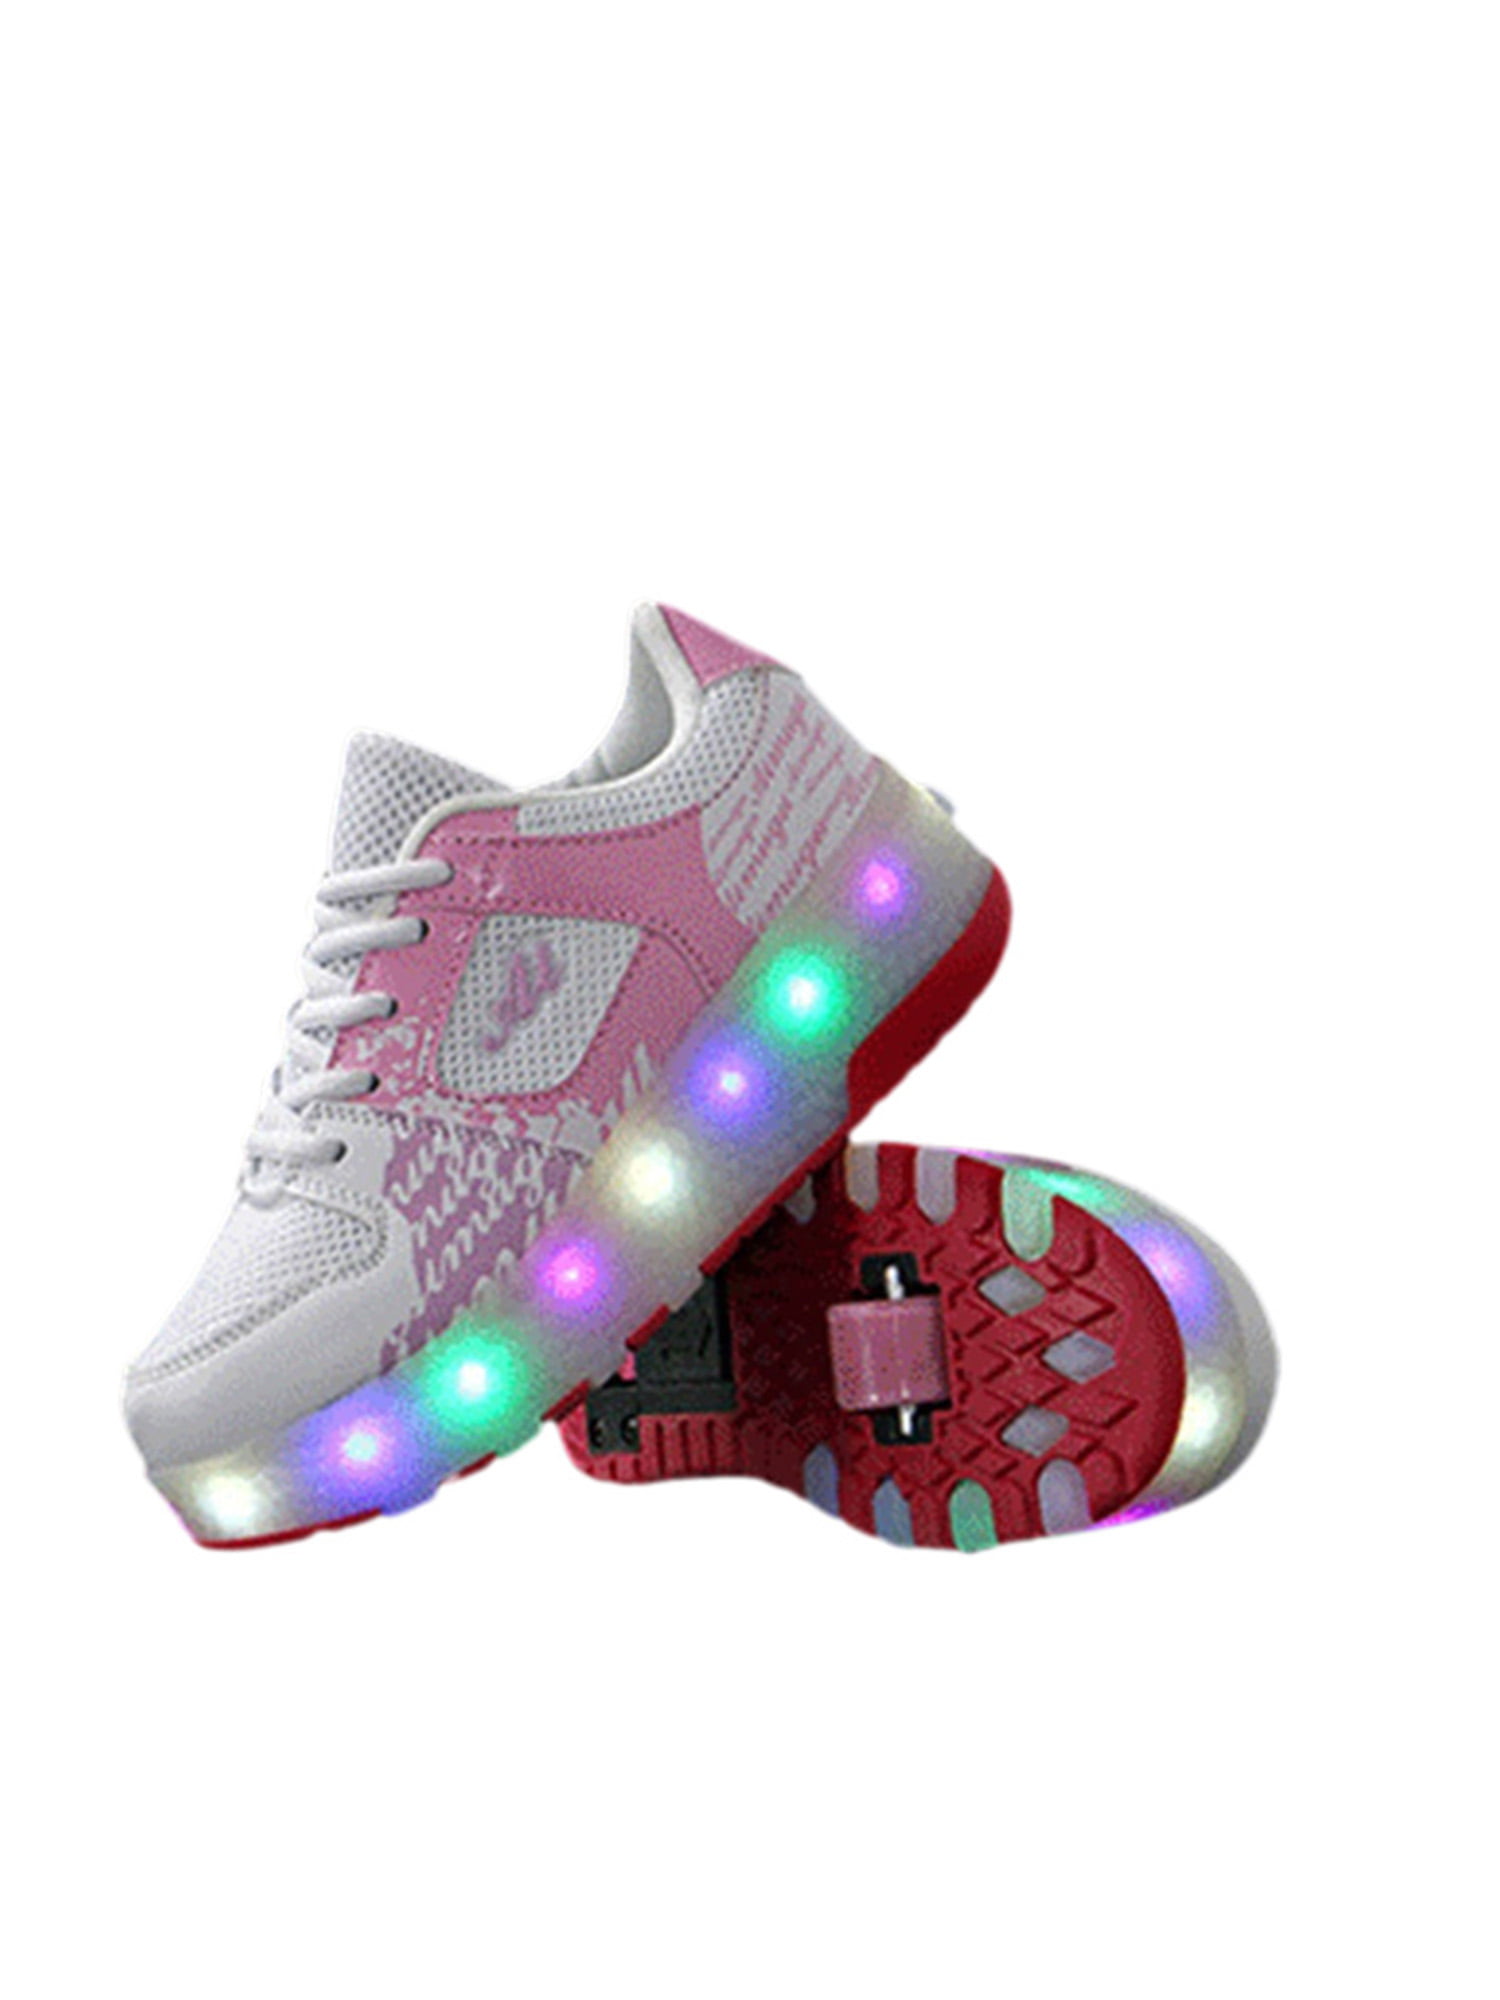 case Heelies-type Rollerskate Shoe Attachments w/ Light-up Wheels x2 pairs 